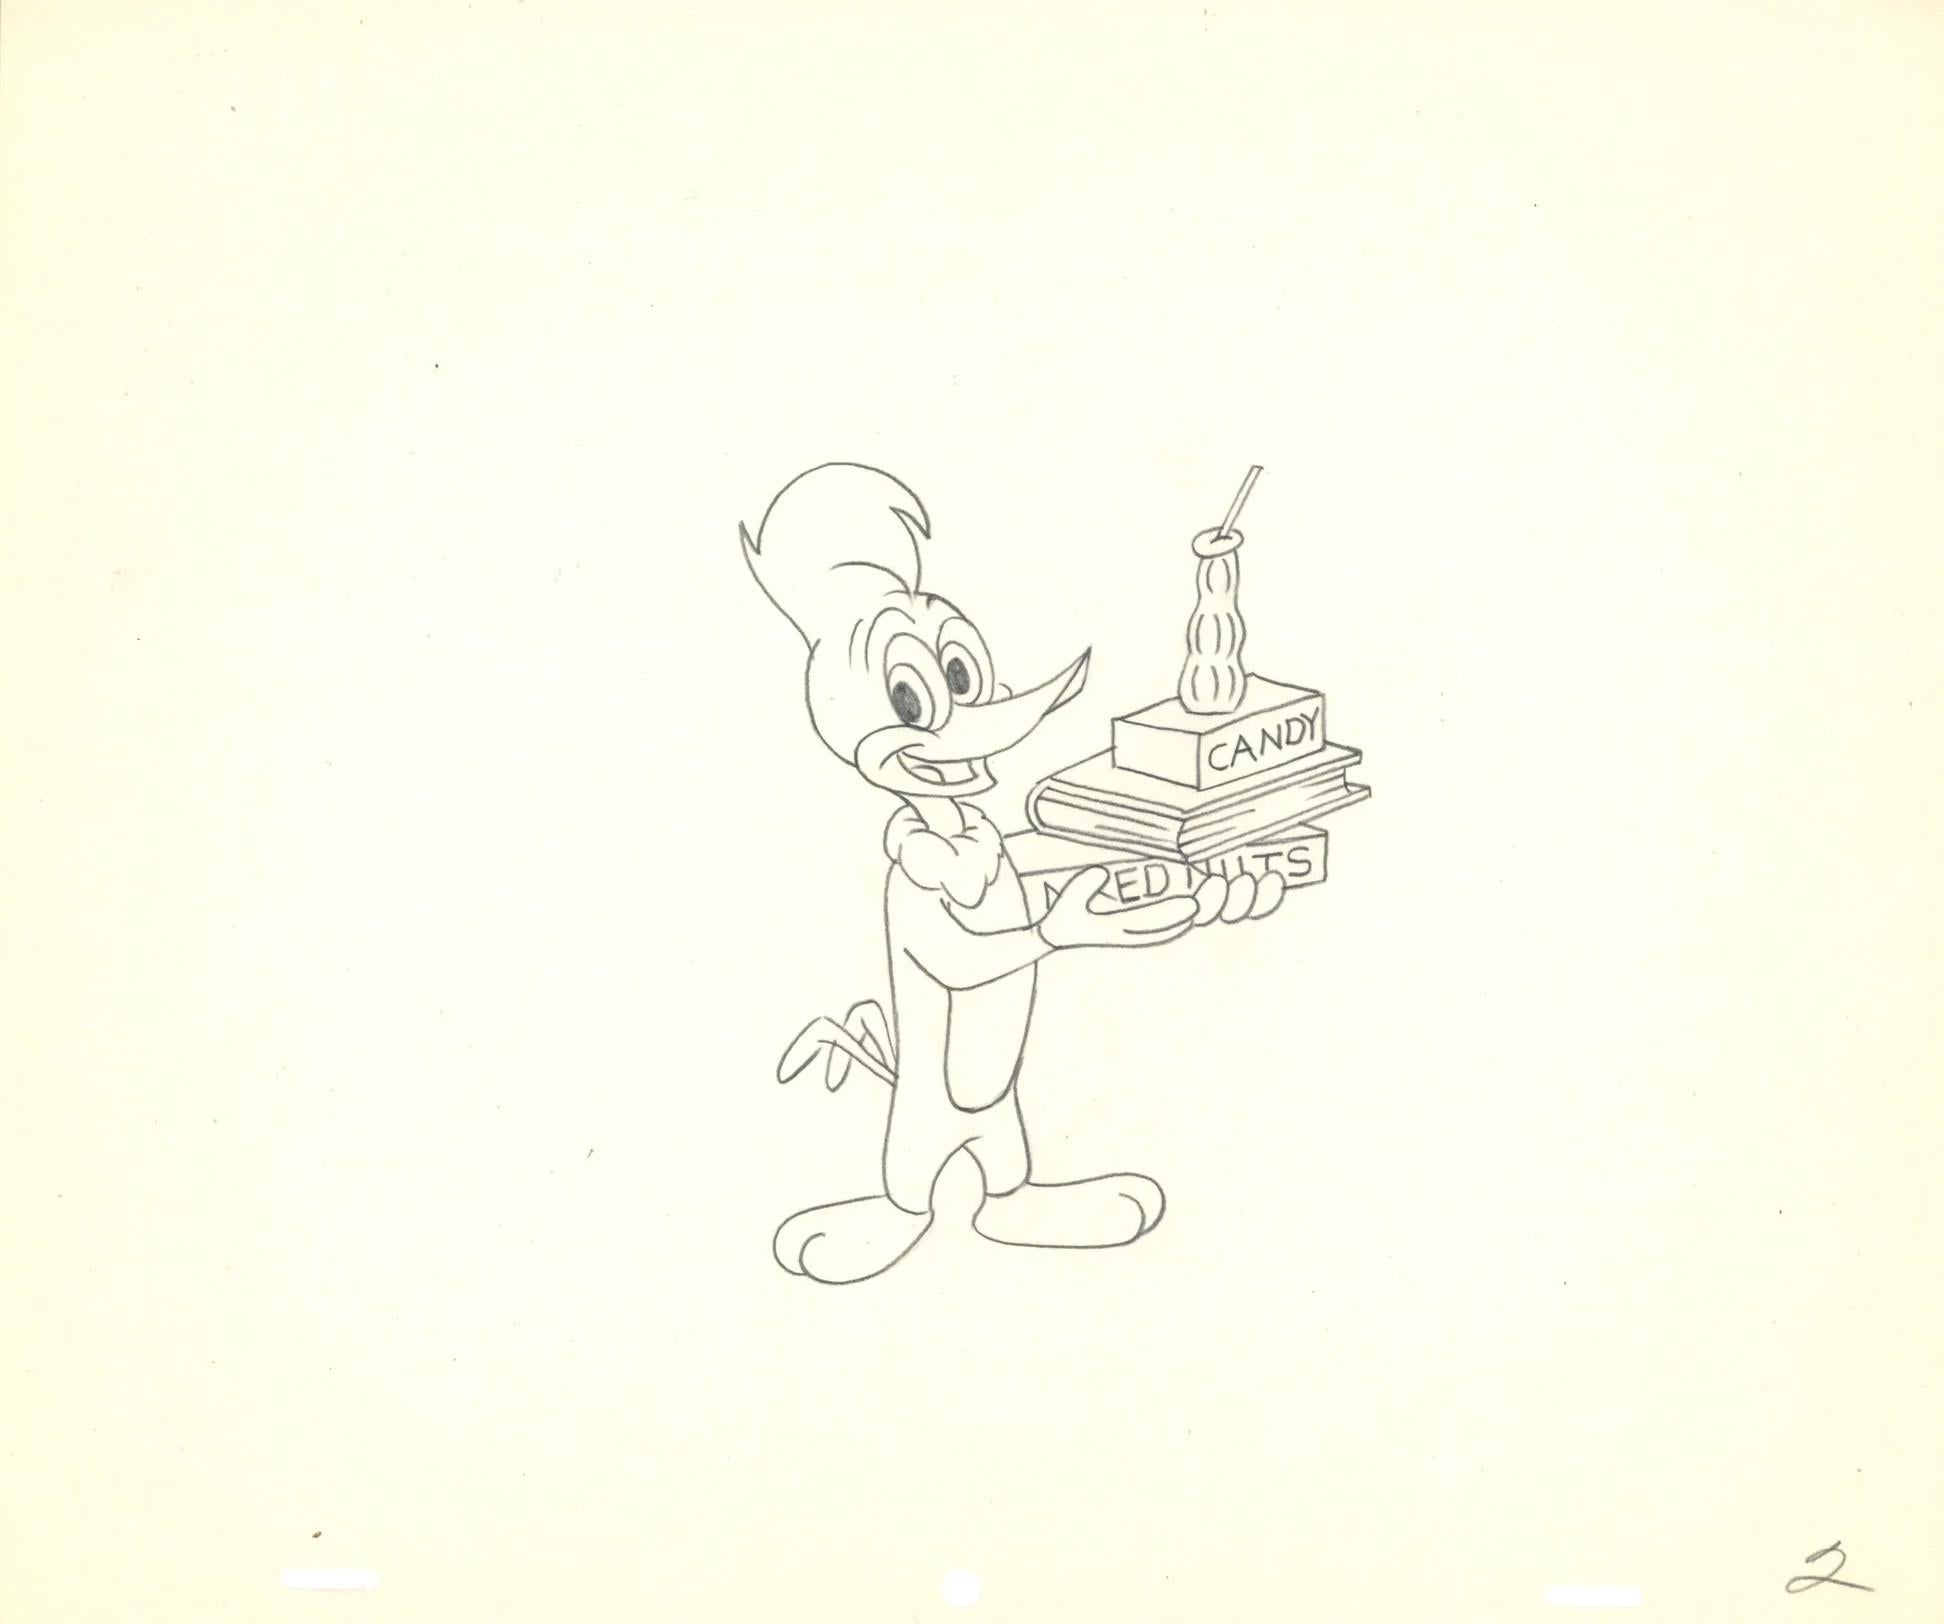 Woody Woodpecker Original Production Drawing and Walter Lantz Signed Check - Art by Walter Lantz Studios